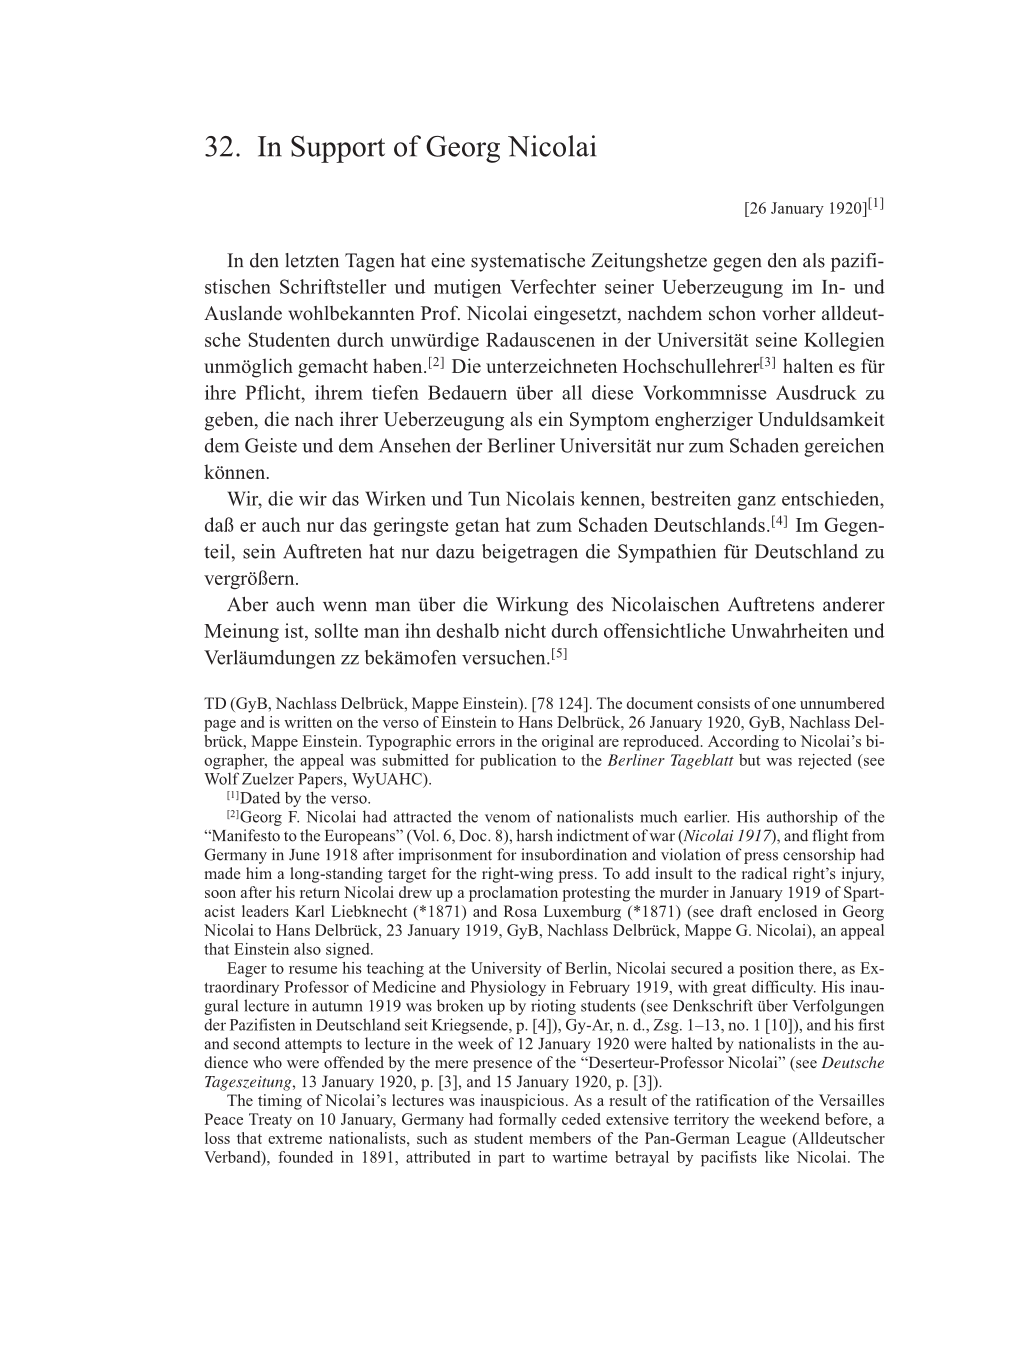 Volume 7: The Berlin Years: Writings, 1918-1921 page 282